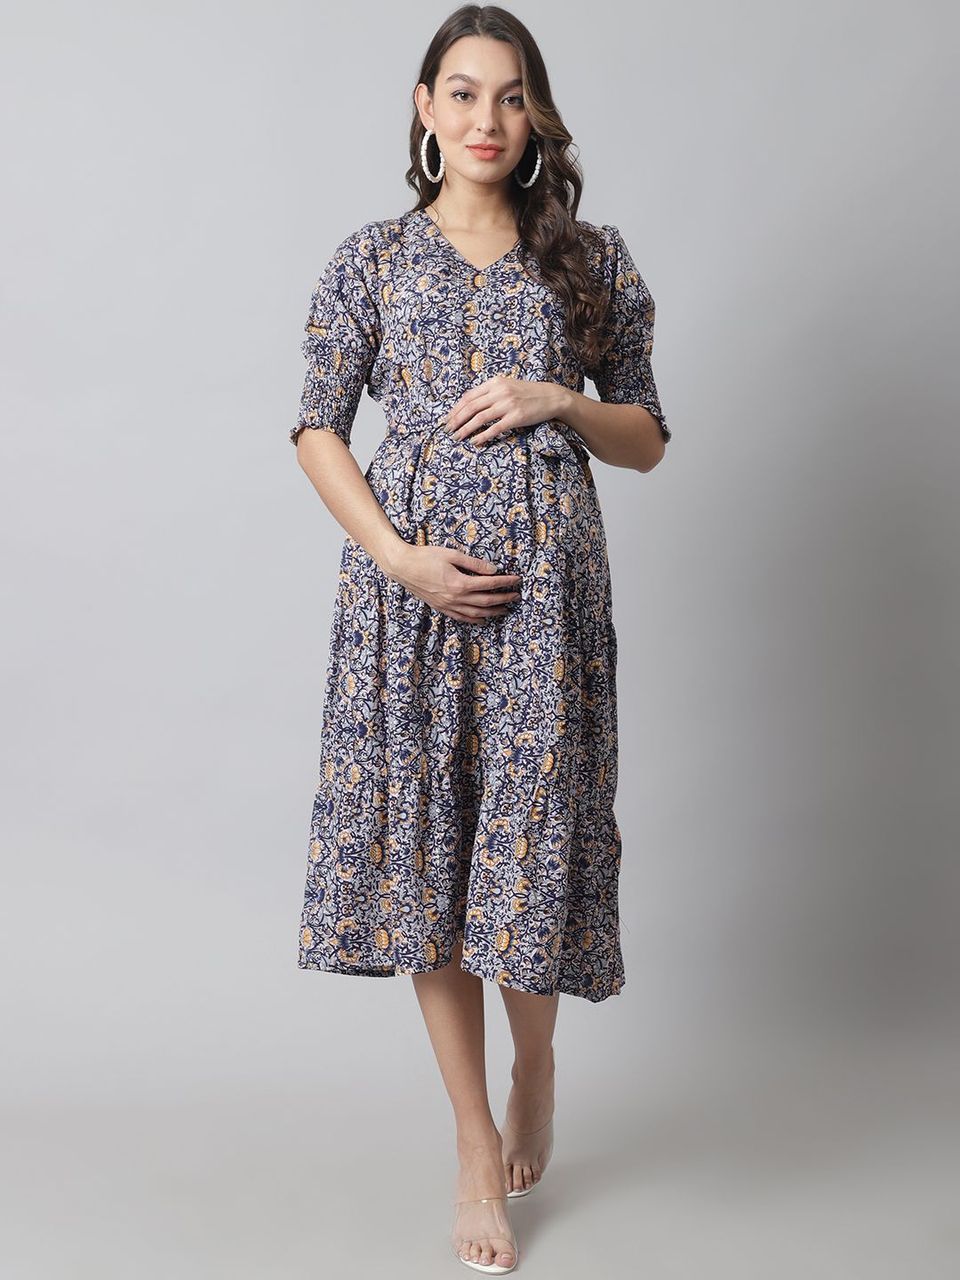 Moms Maternity Women's Maternity Crepe Navy Blue Floral Midi Dress